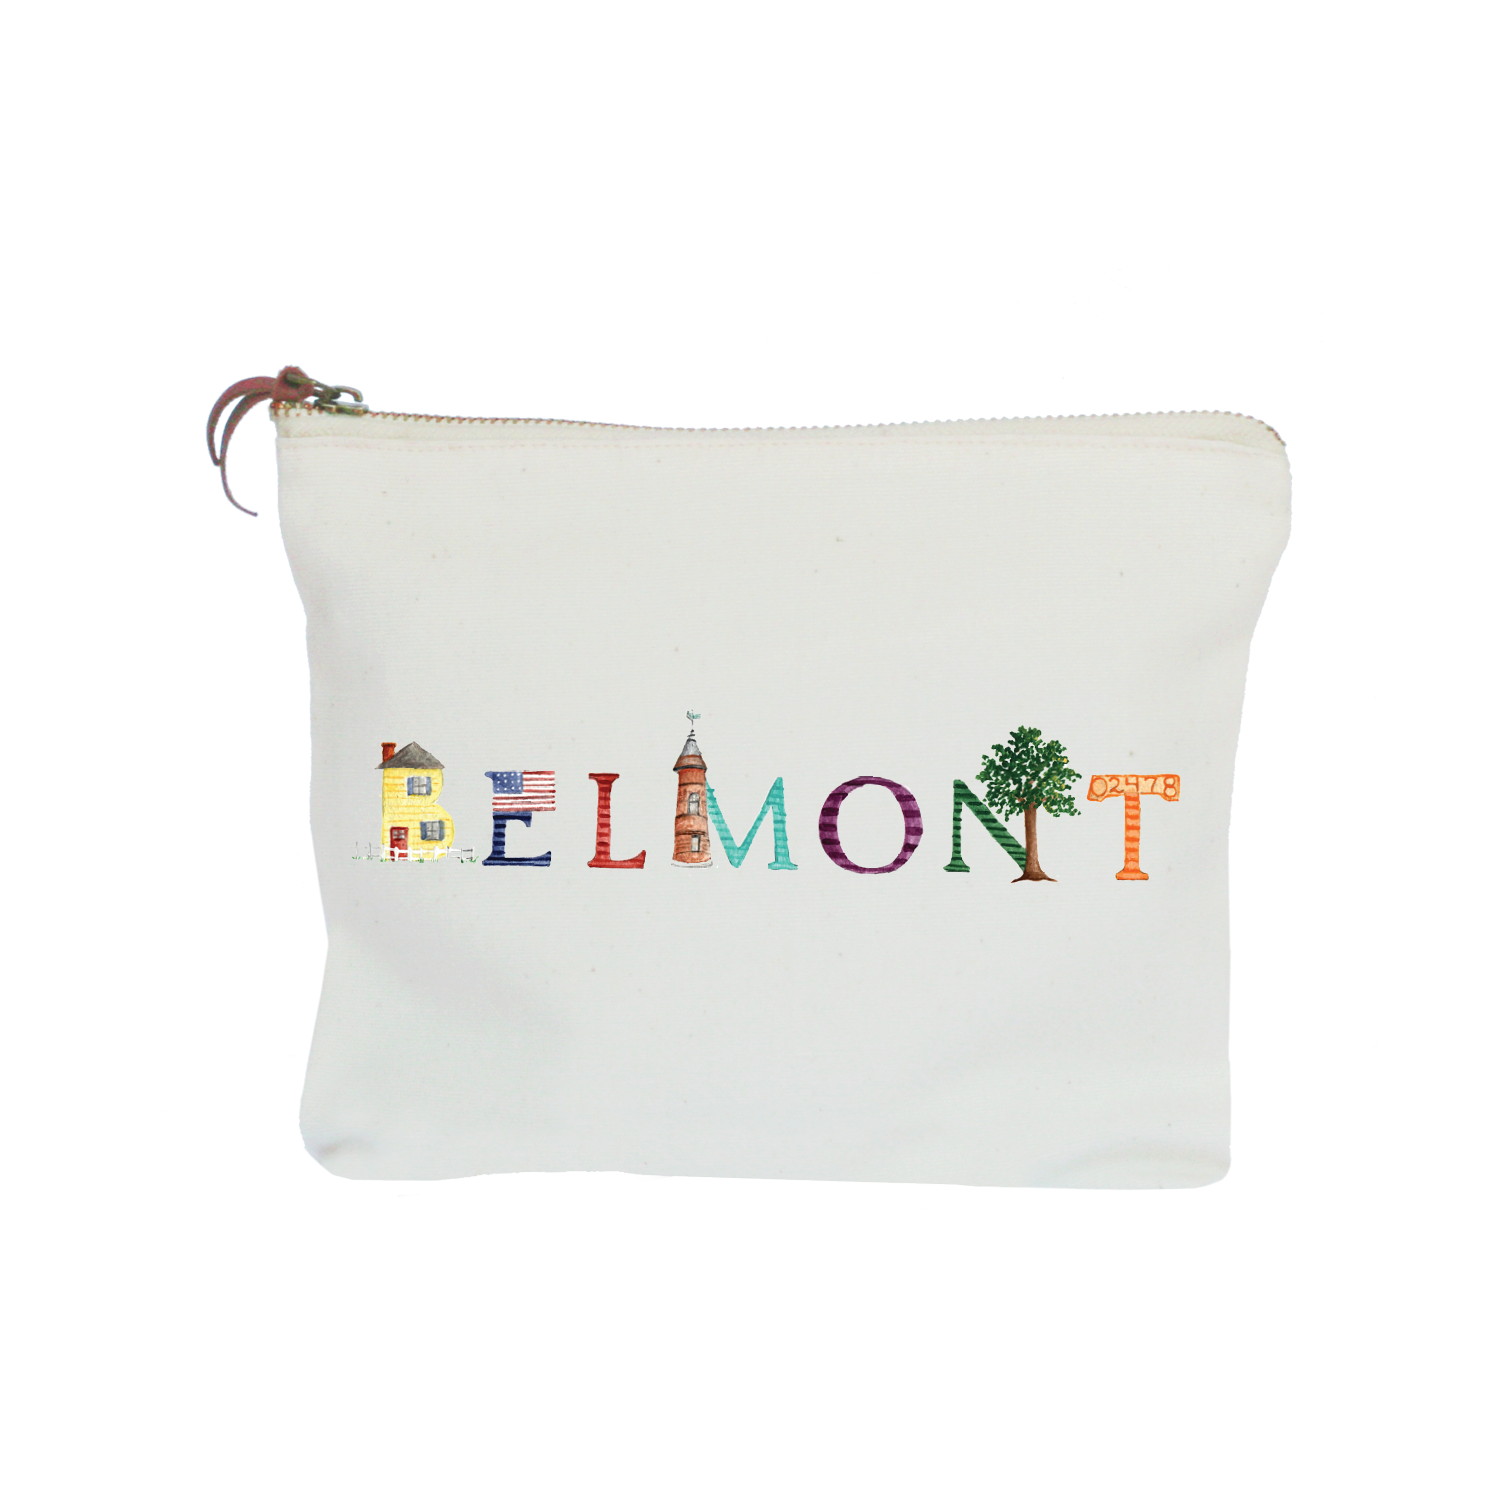 Belmont zipper pouch